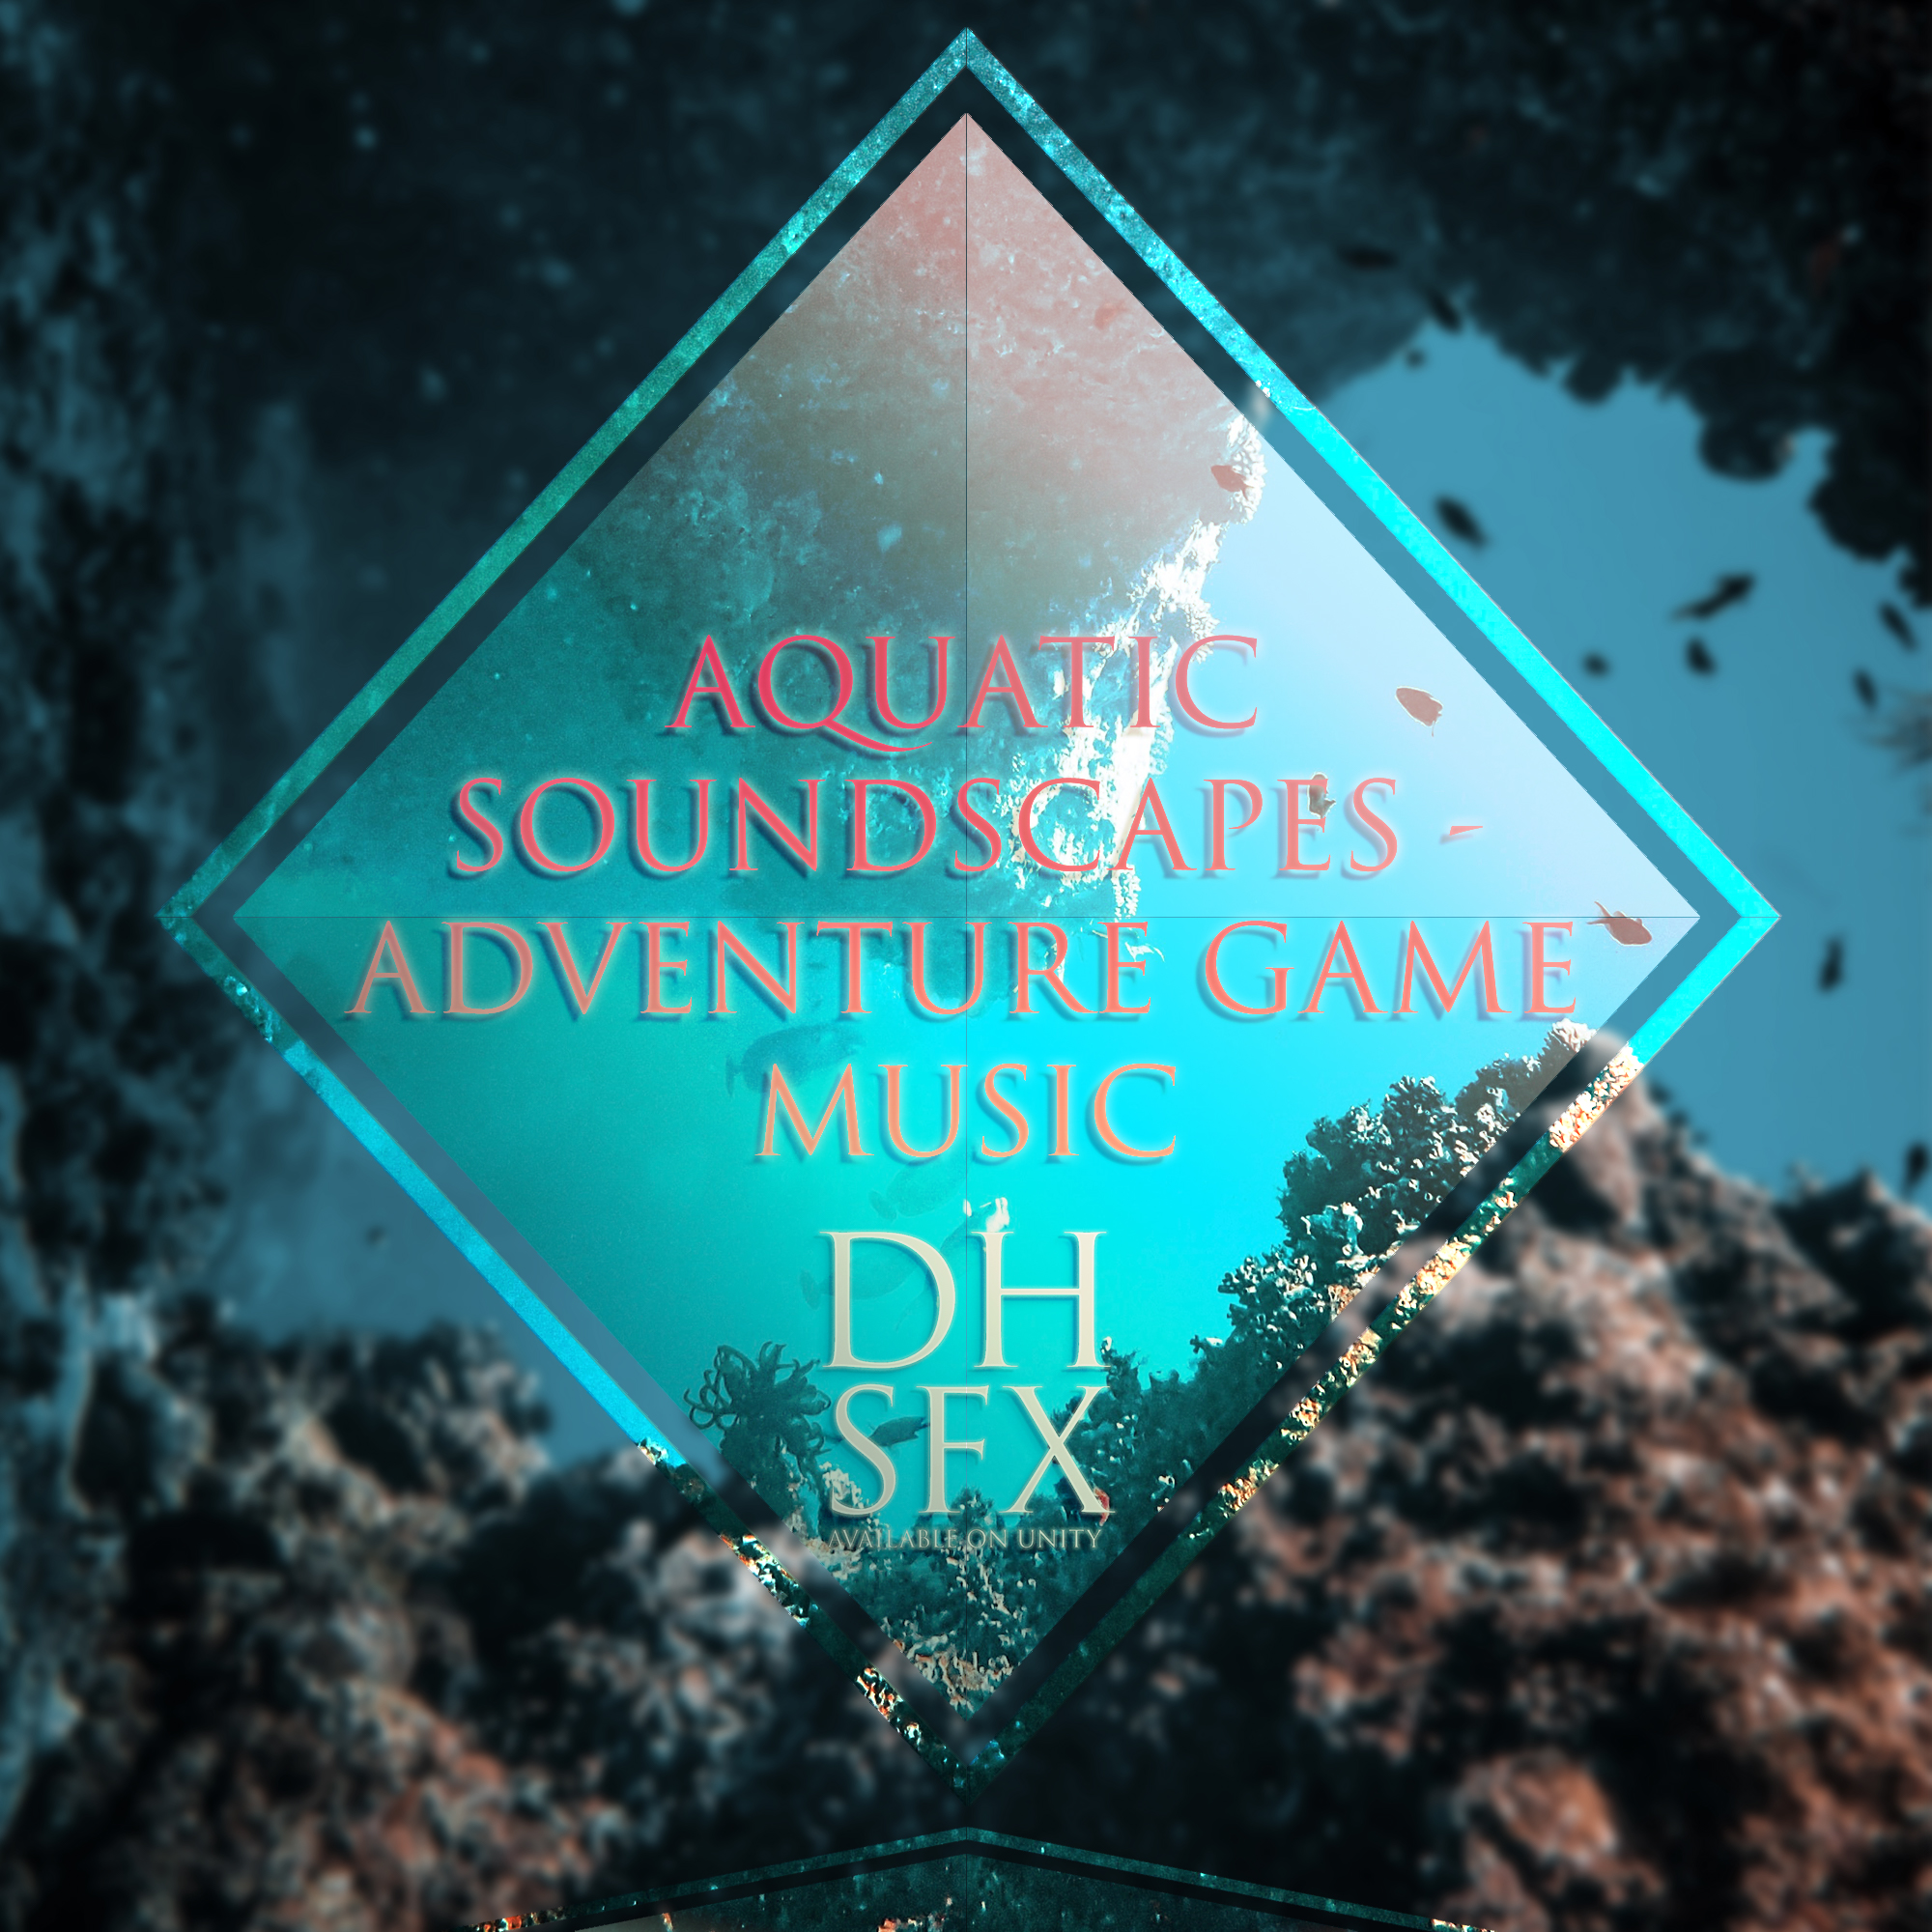 Aquatic Soundscapes - Adventure Game Music